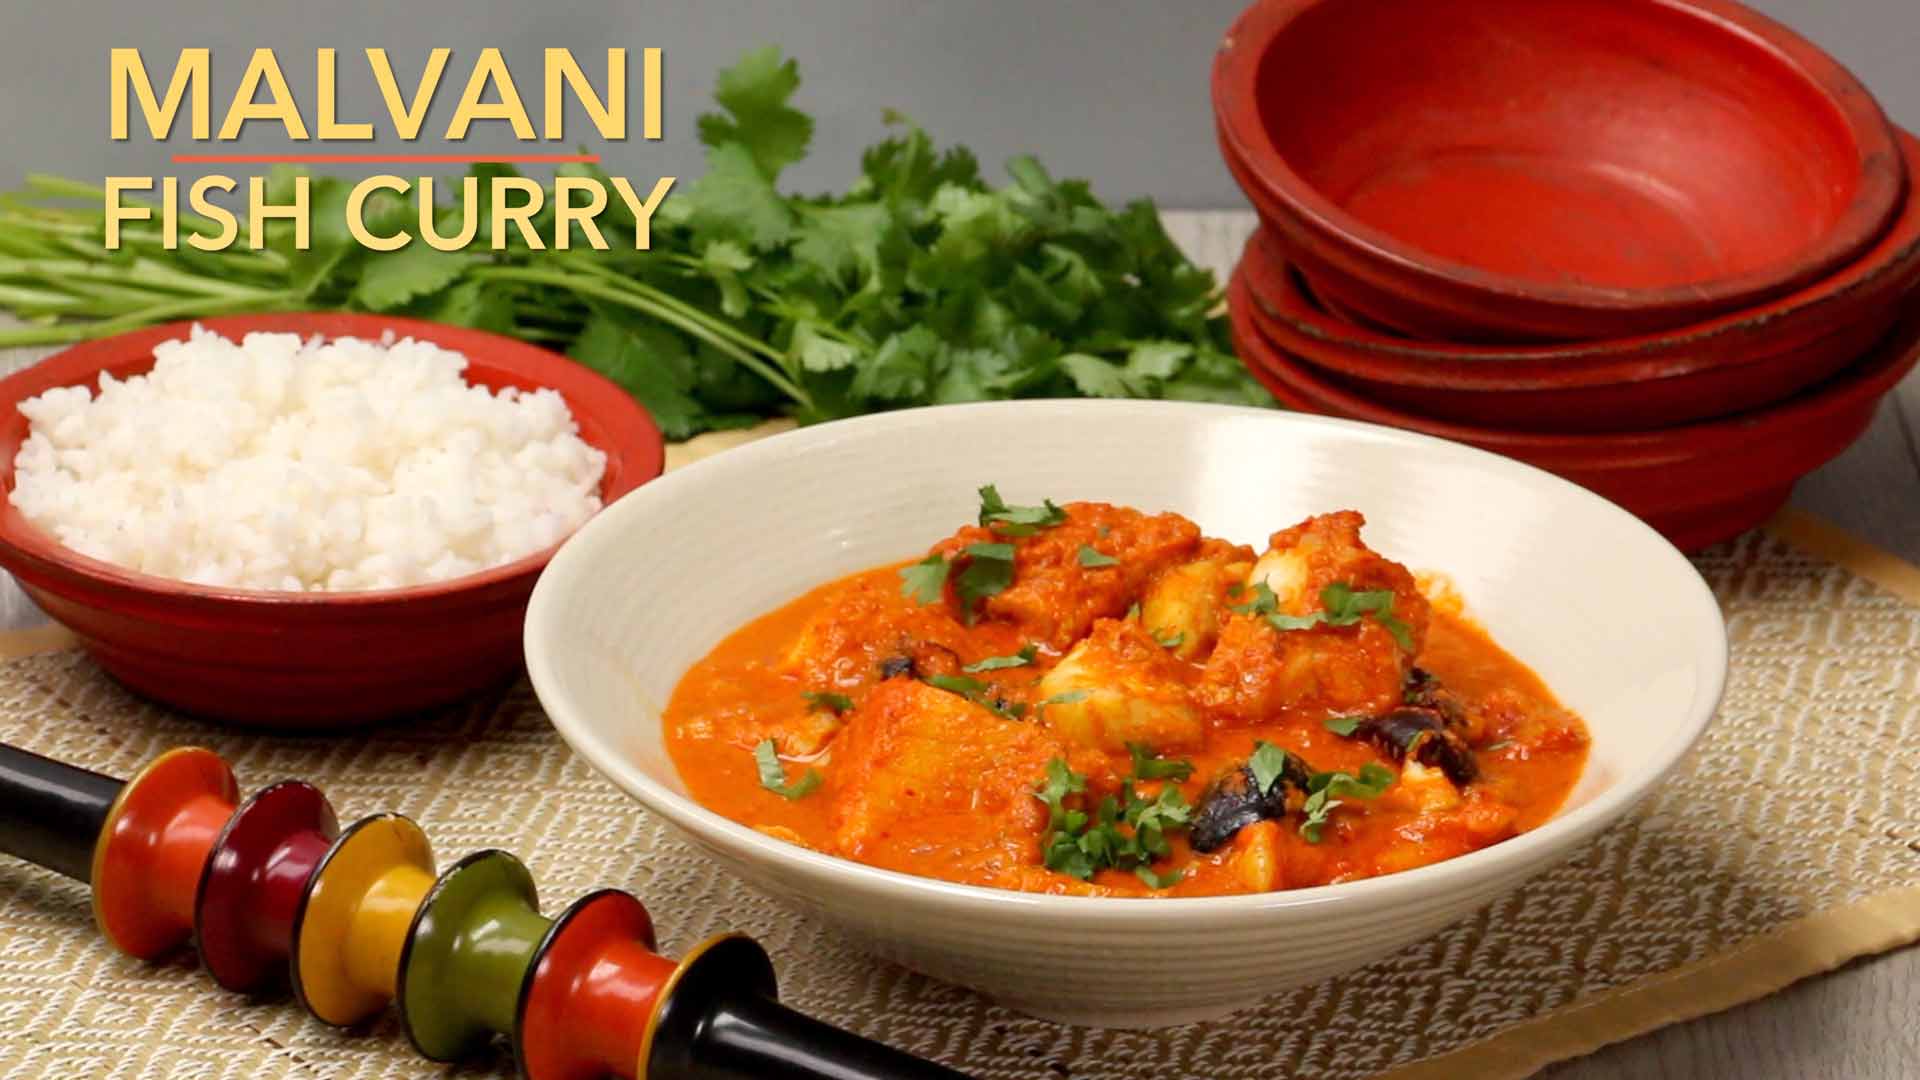 Malvani Fish Curry Recipe | How to make Malvani Fish Curry